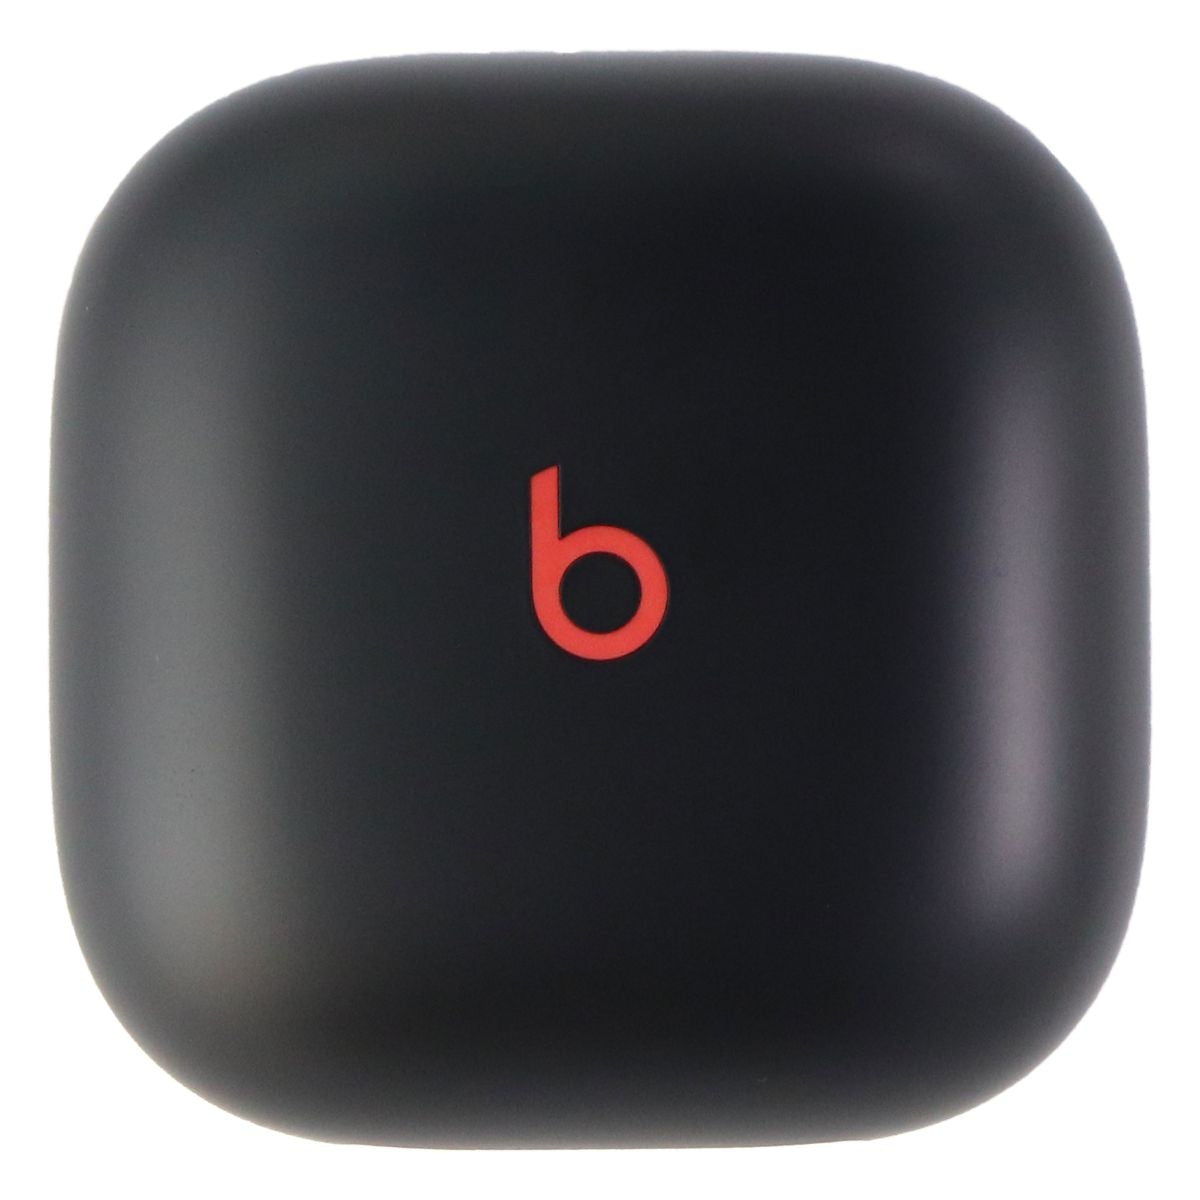 Beats OEM Original Charging Case for Beats Fit Pro Headphones - Black Portable Audio - Headphones Beats    - Simple Cell Bulk Wholesale Pricing - USA Seller